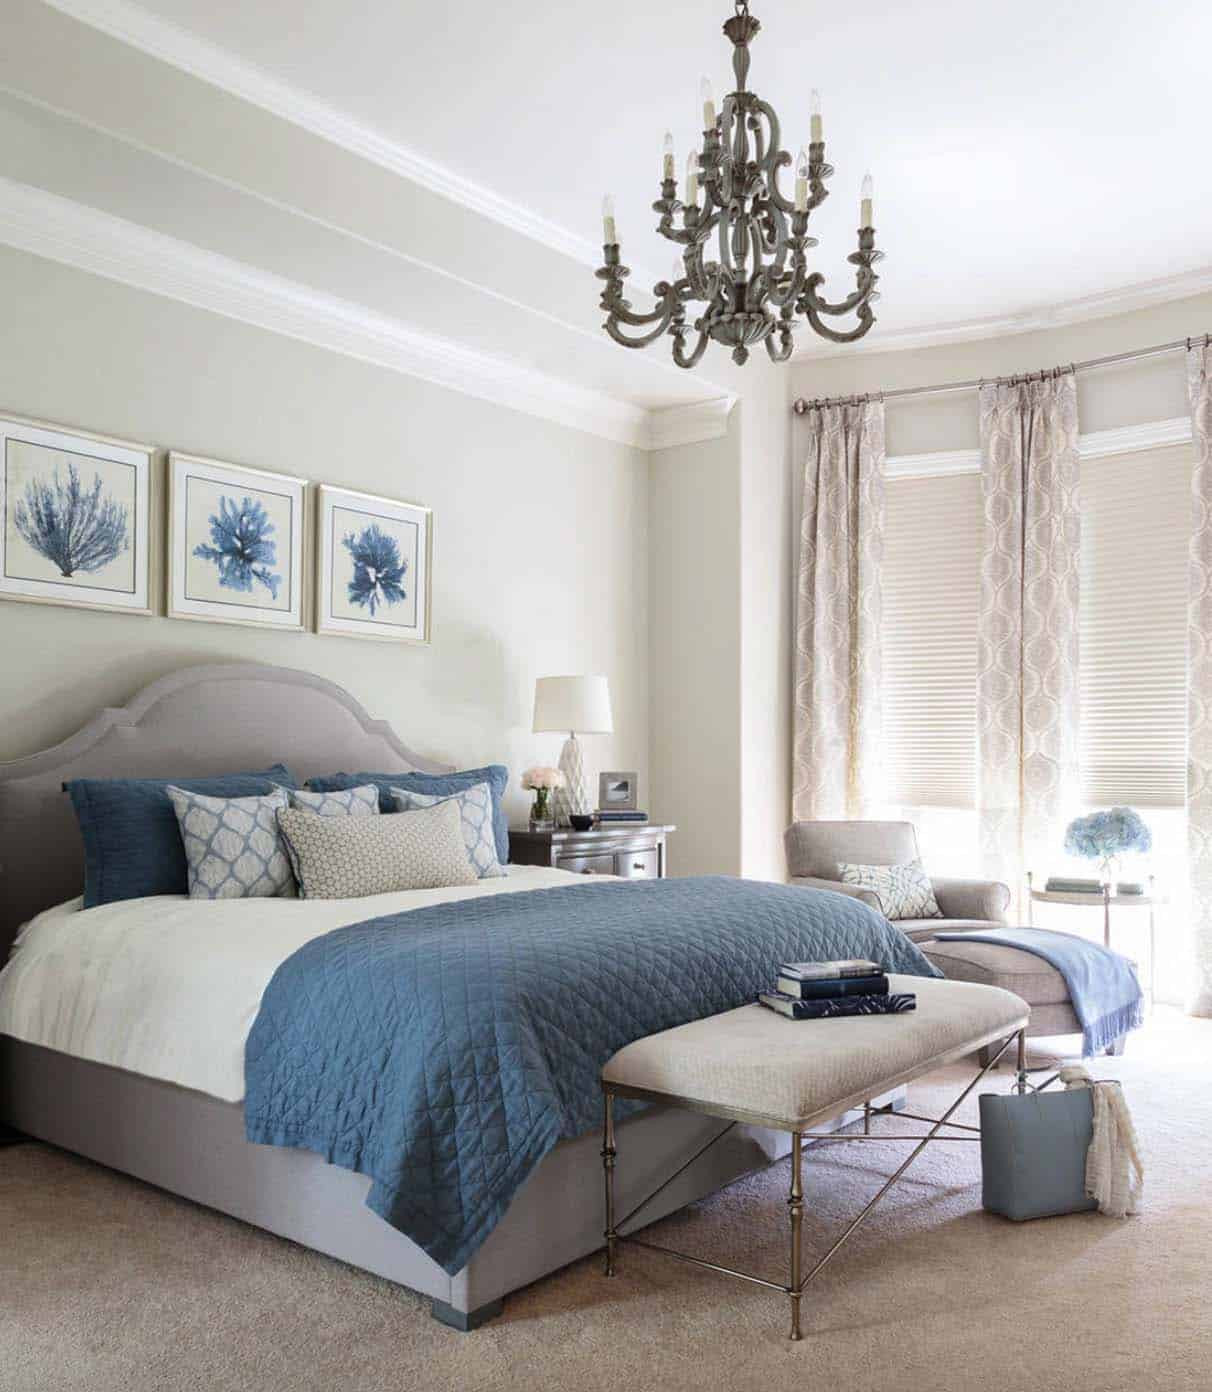 Master Bedroom Comforter Ideas
 20 Serene And Elegant Master Bedroom Decorating Ideas